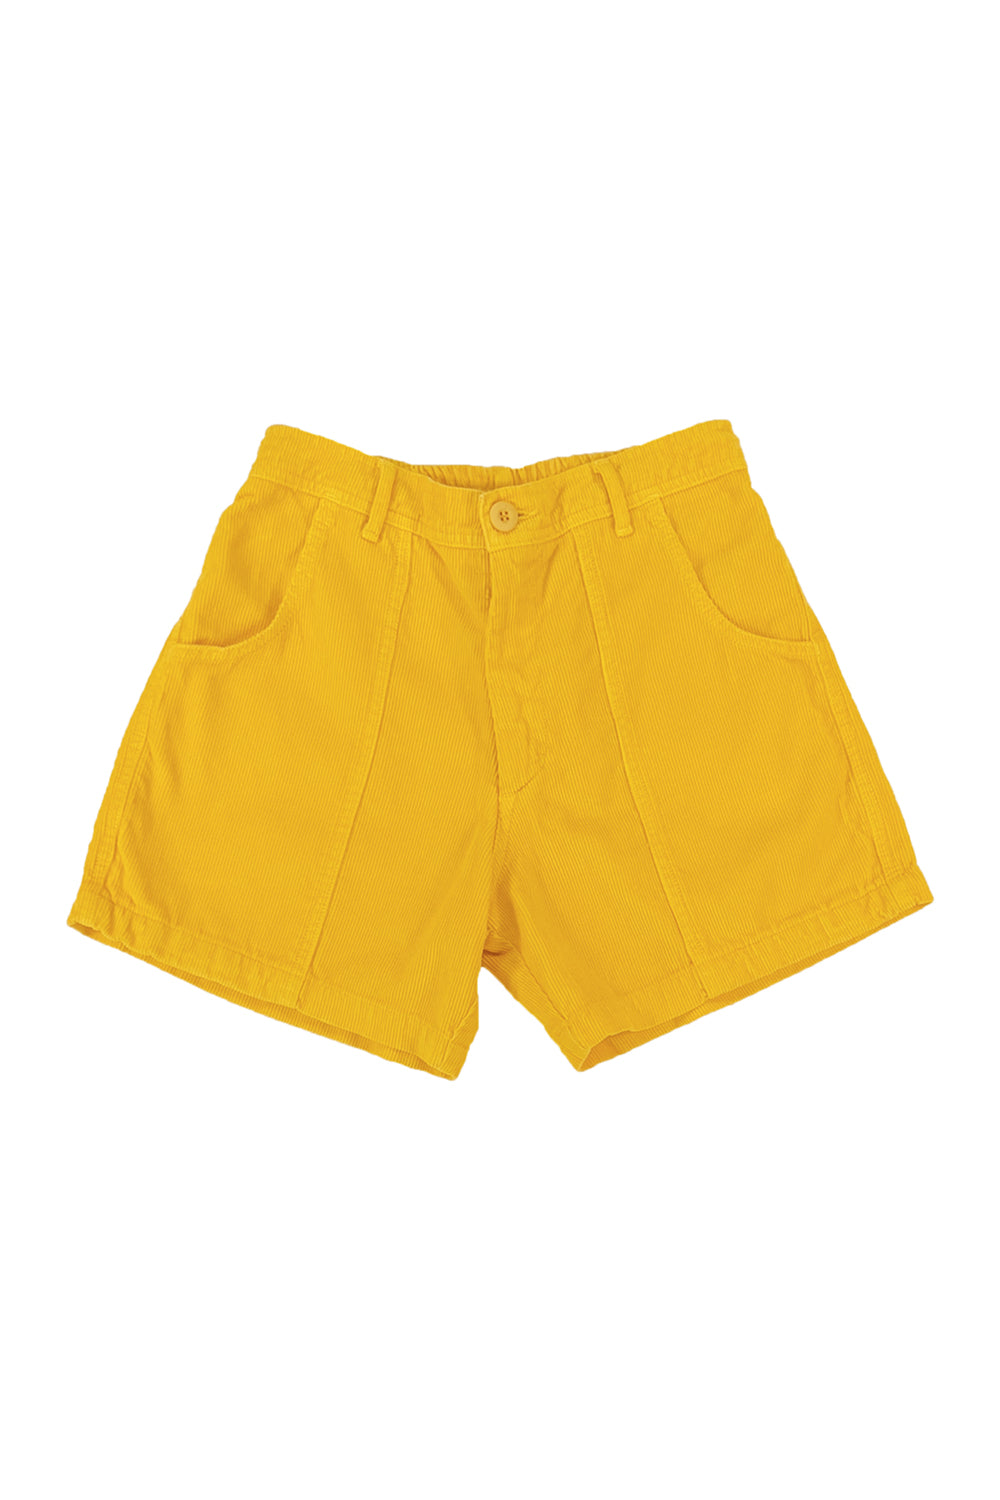 Cabuya Cord Short | Jungmaven Hemp Clothing & Accessories / Color: Sunshine Yellow